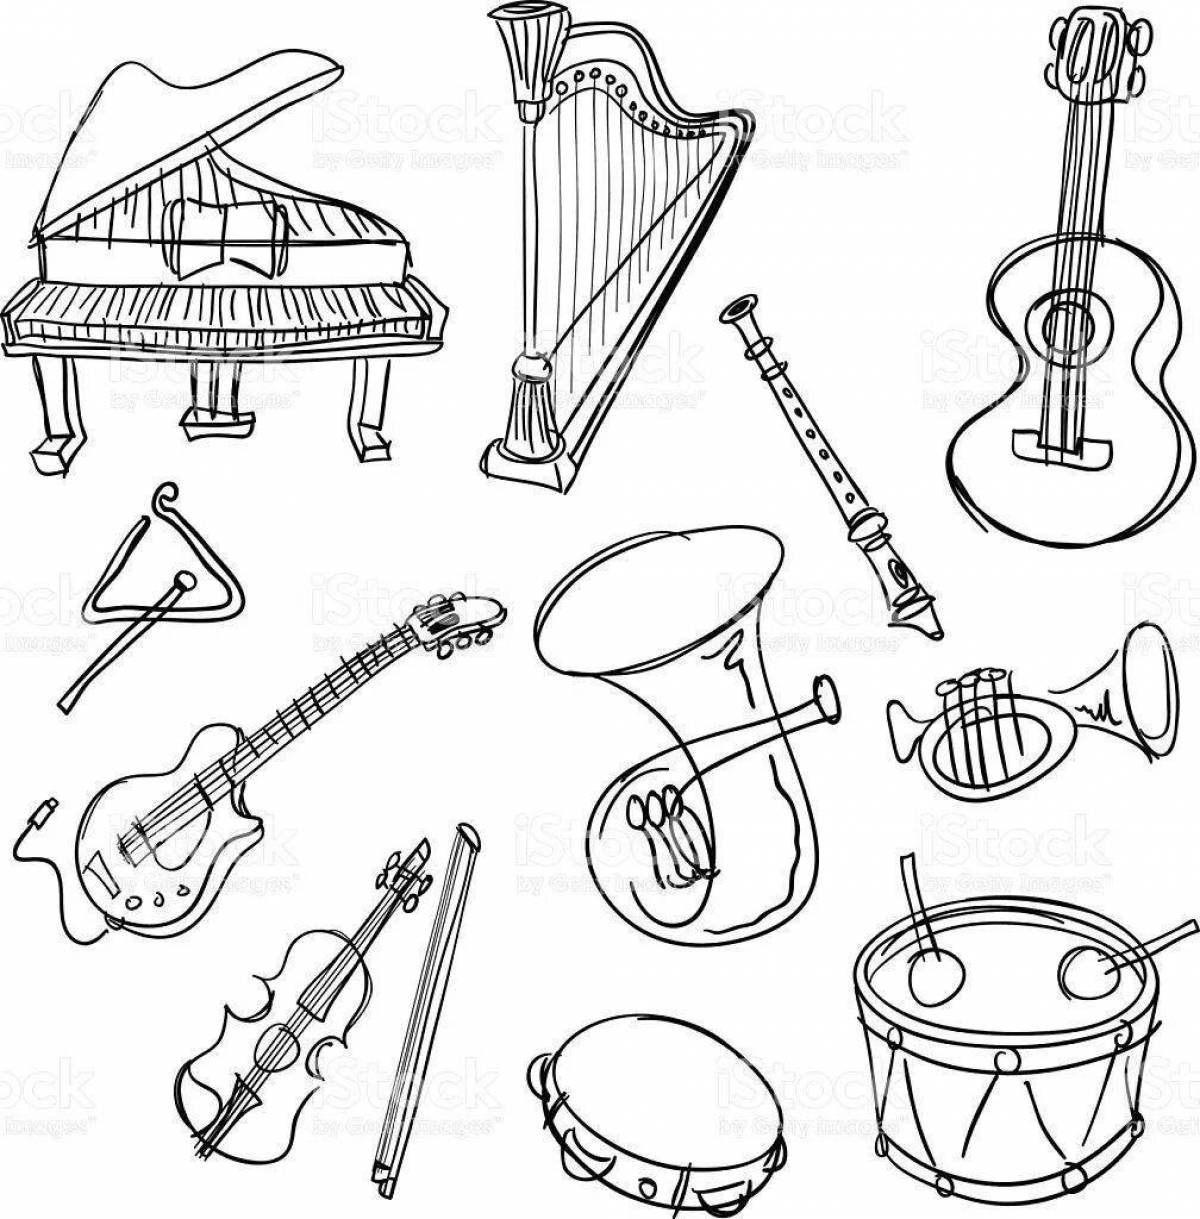 Fascinating Russian folk musical instruments